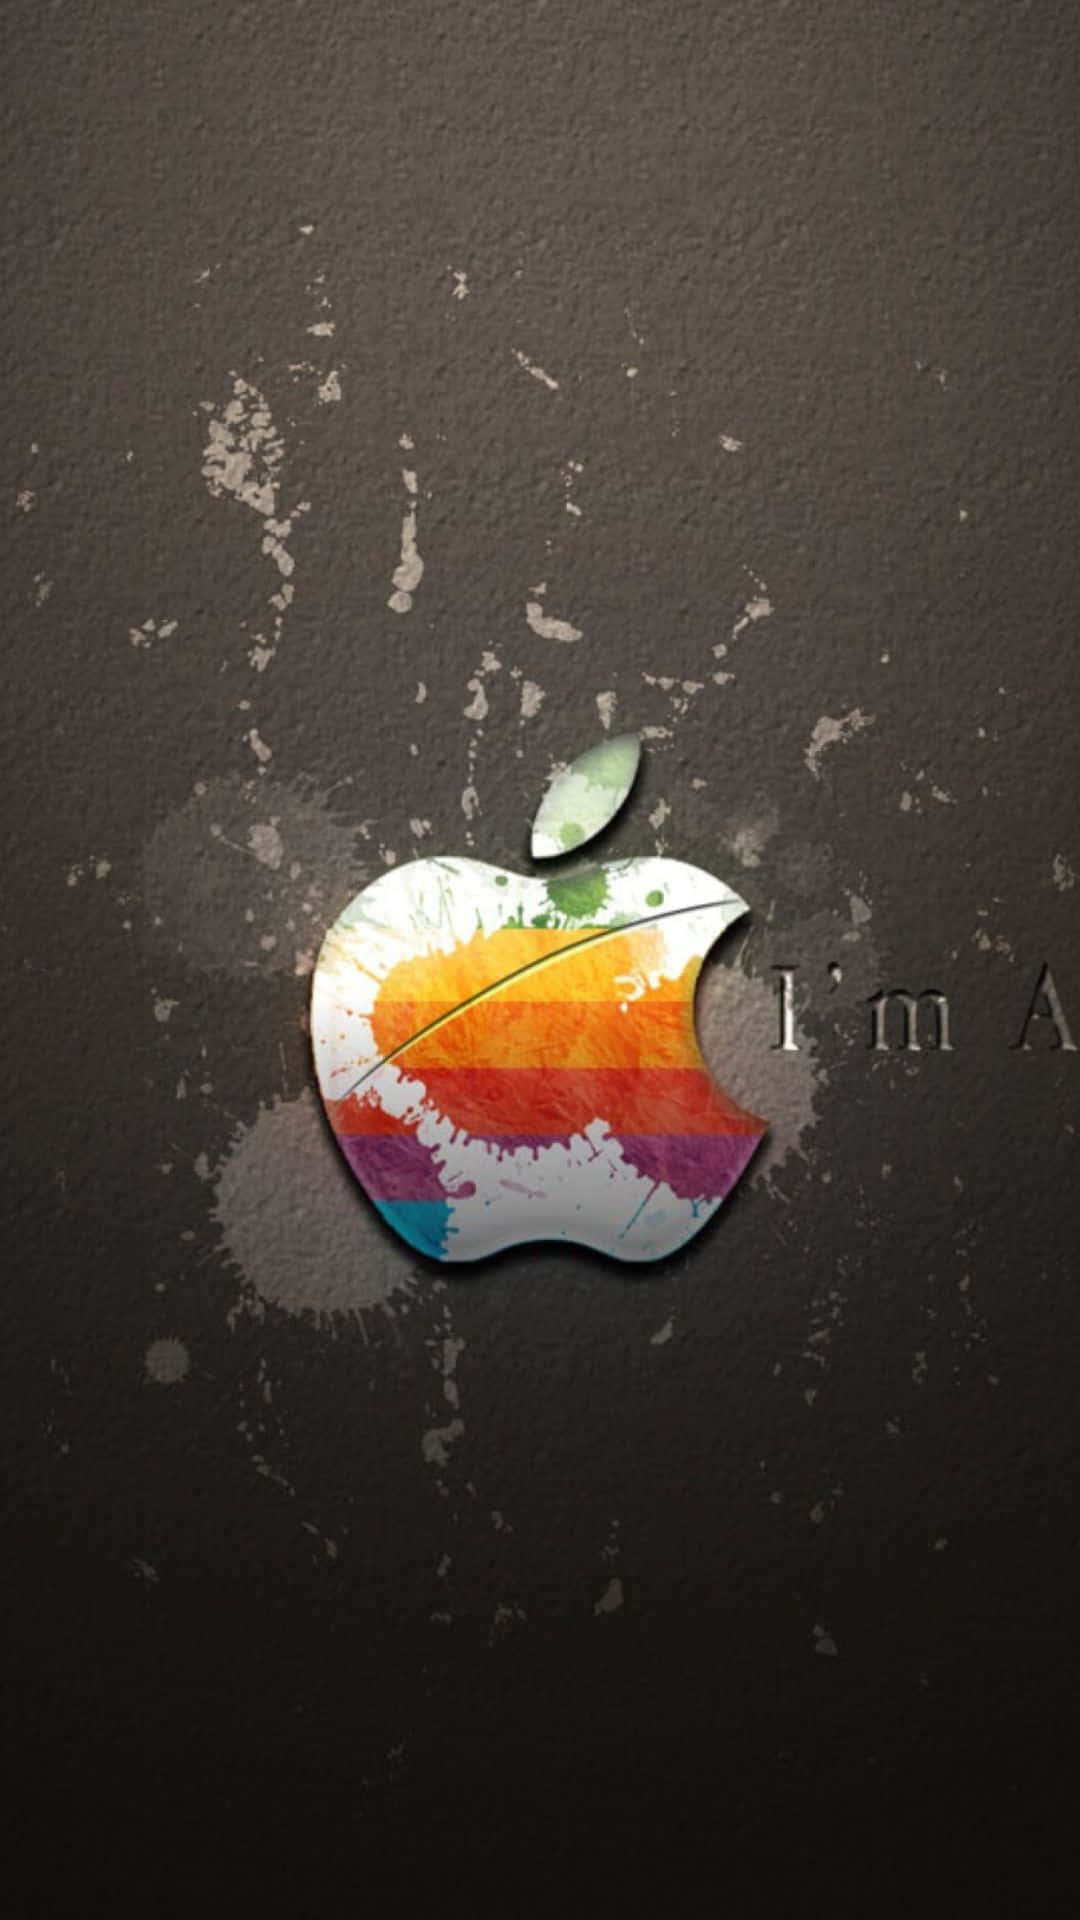 Apple Iphone X Insignia Water Splatters Wallpaper